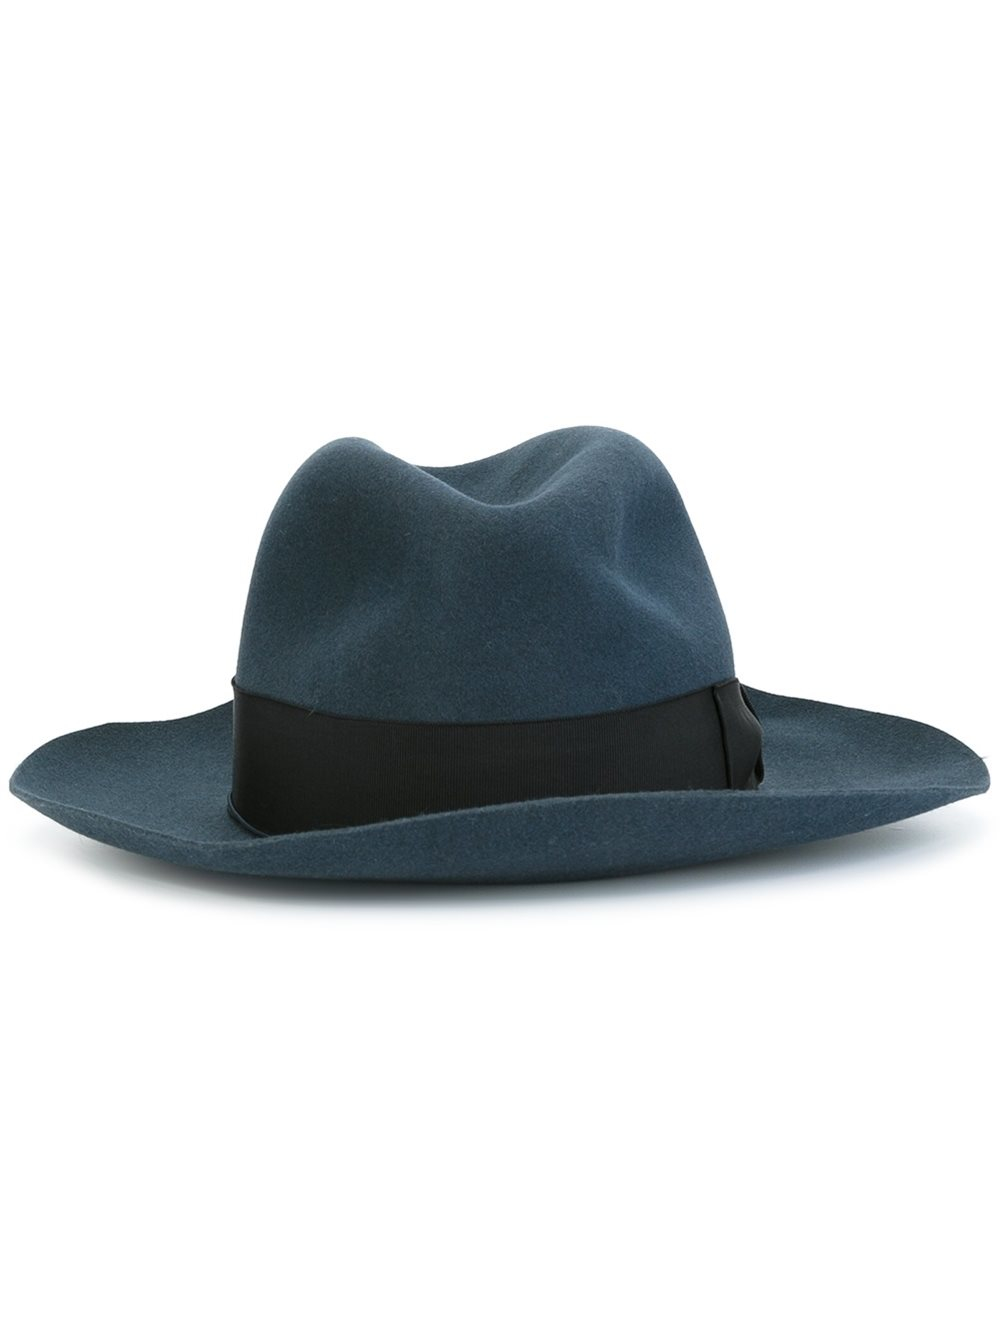 Lyst - Borsalino Fedora Hat in Blue for Men